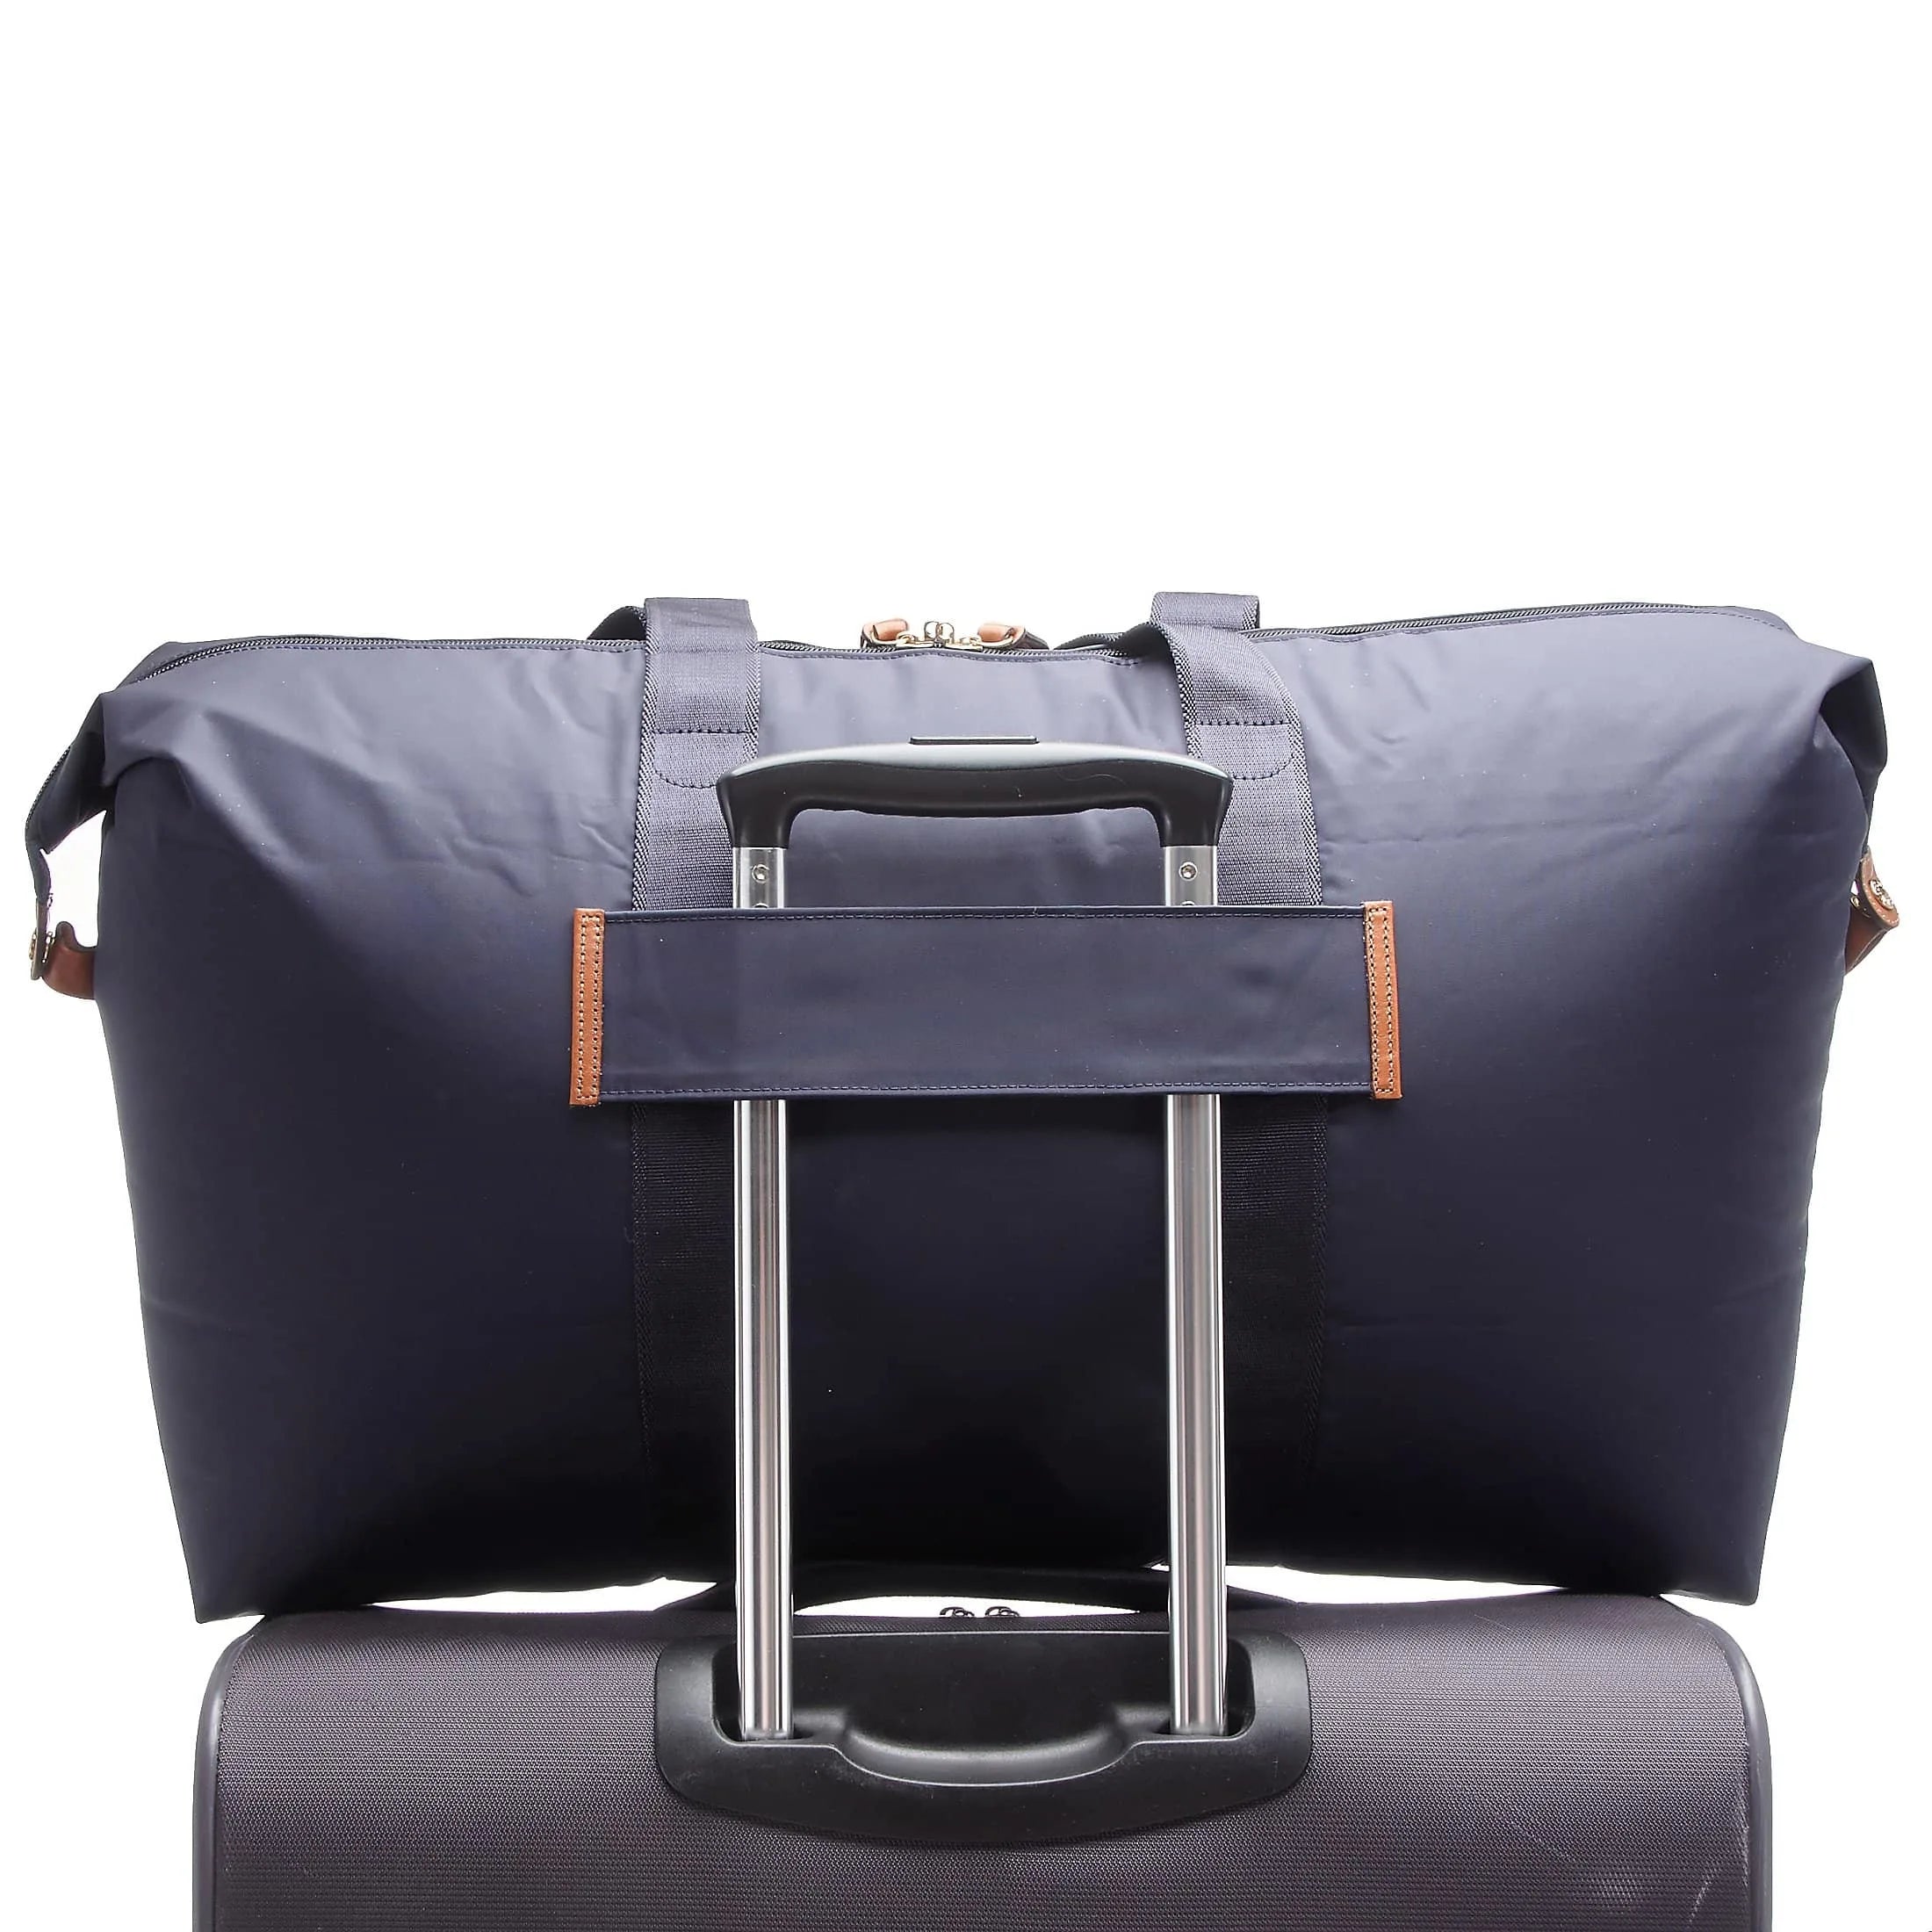 Brics X-Bag travel bag 55 cm - Red